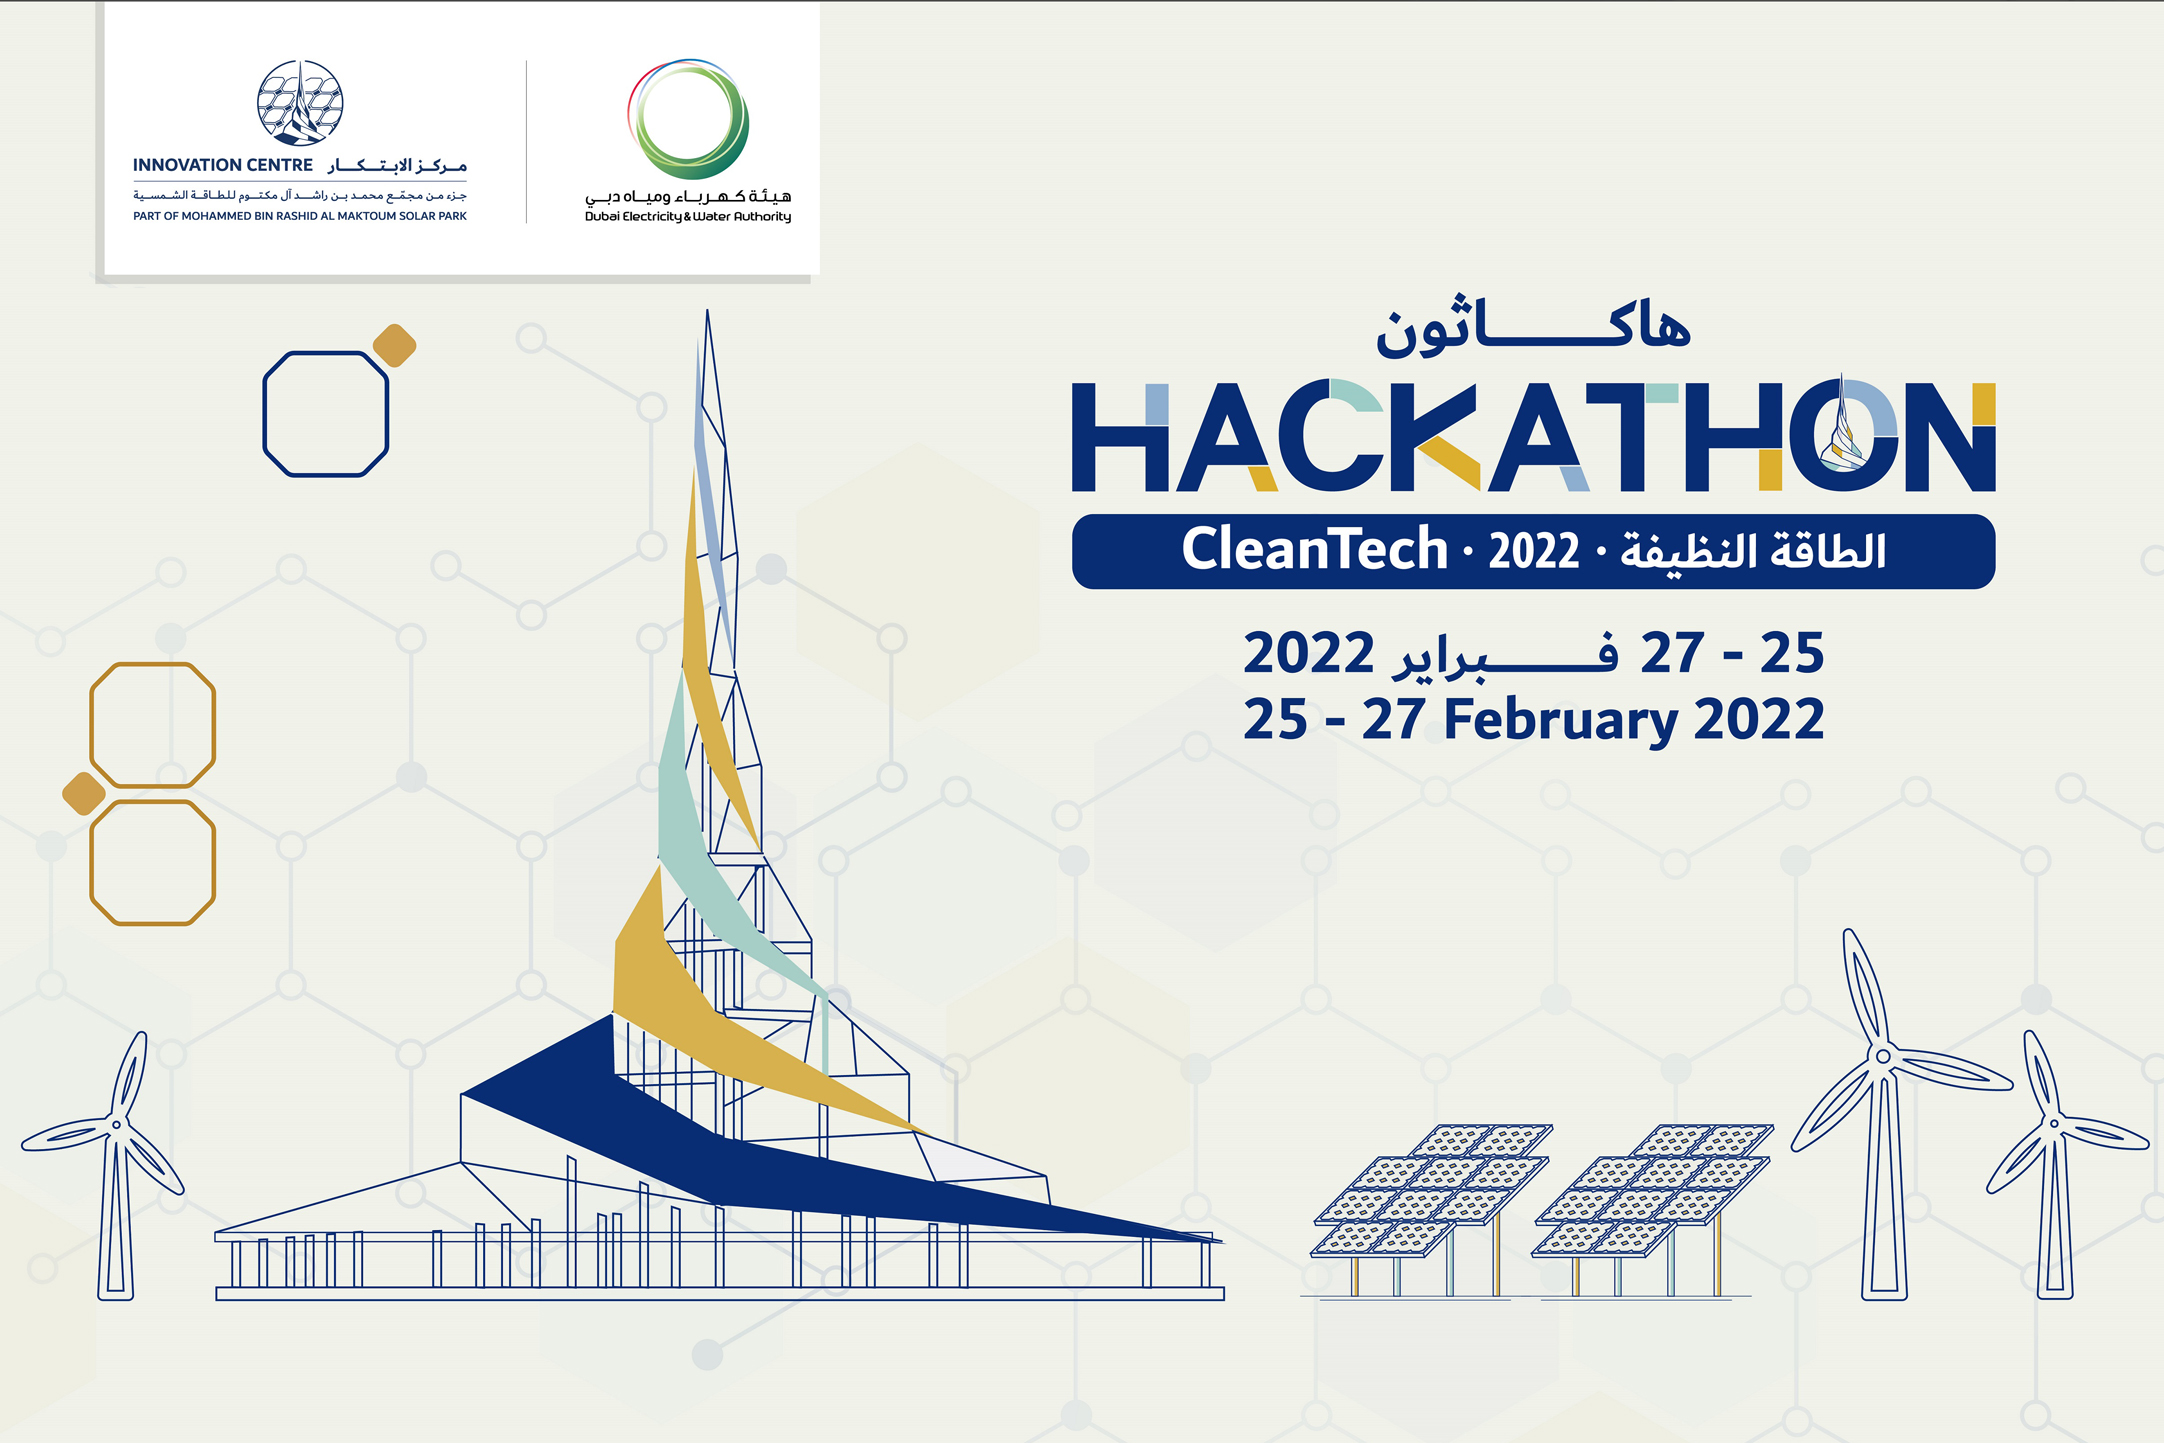 DEWA’s Innovation Centre invites competitors to participate in Cleantech Hackathon